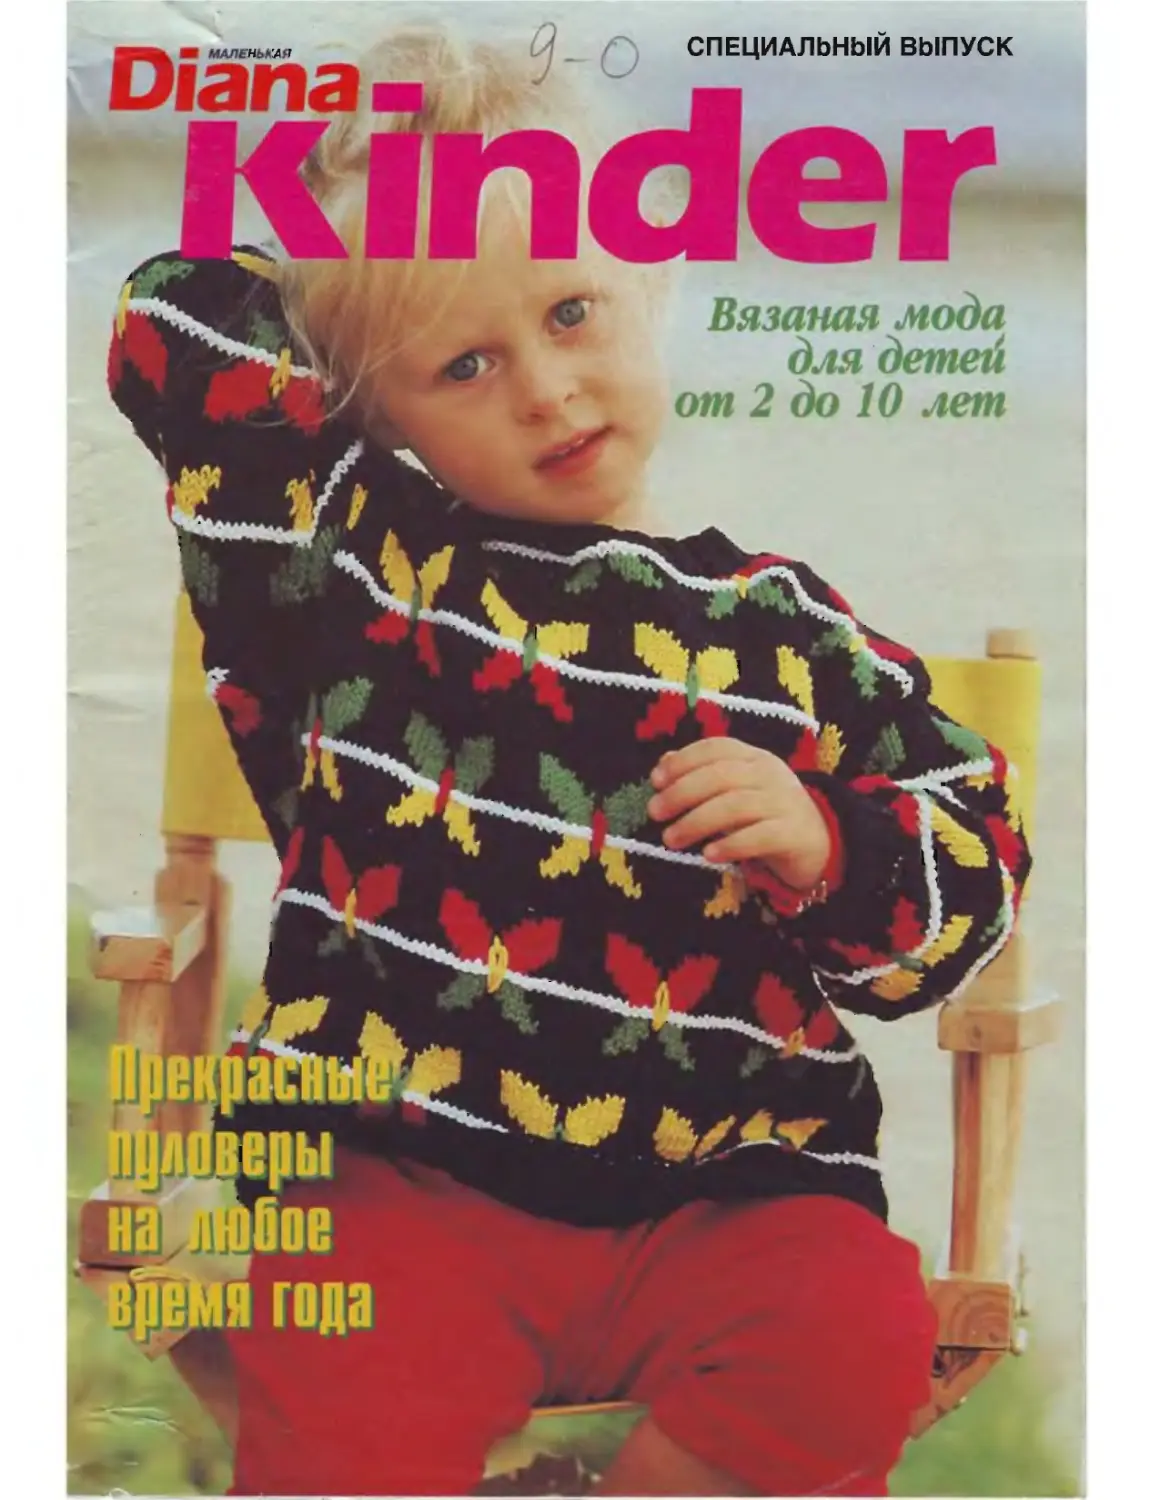 Kind magazine. Журнал Киндер вязание для детей. Дети 1998 года.